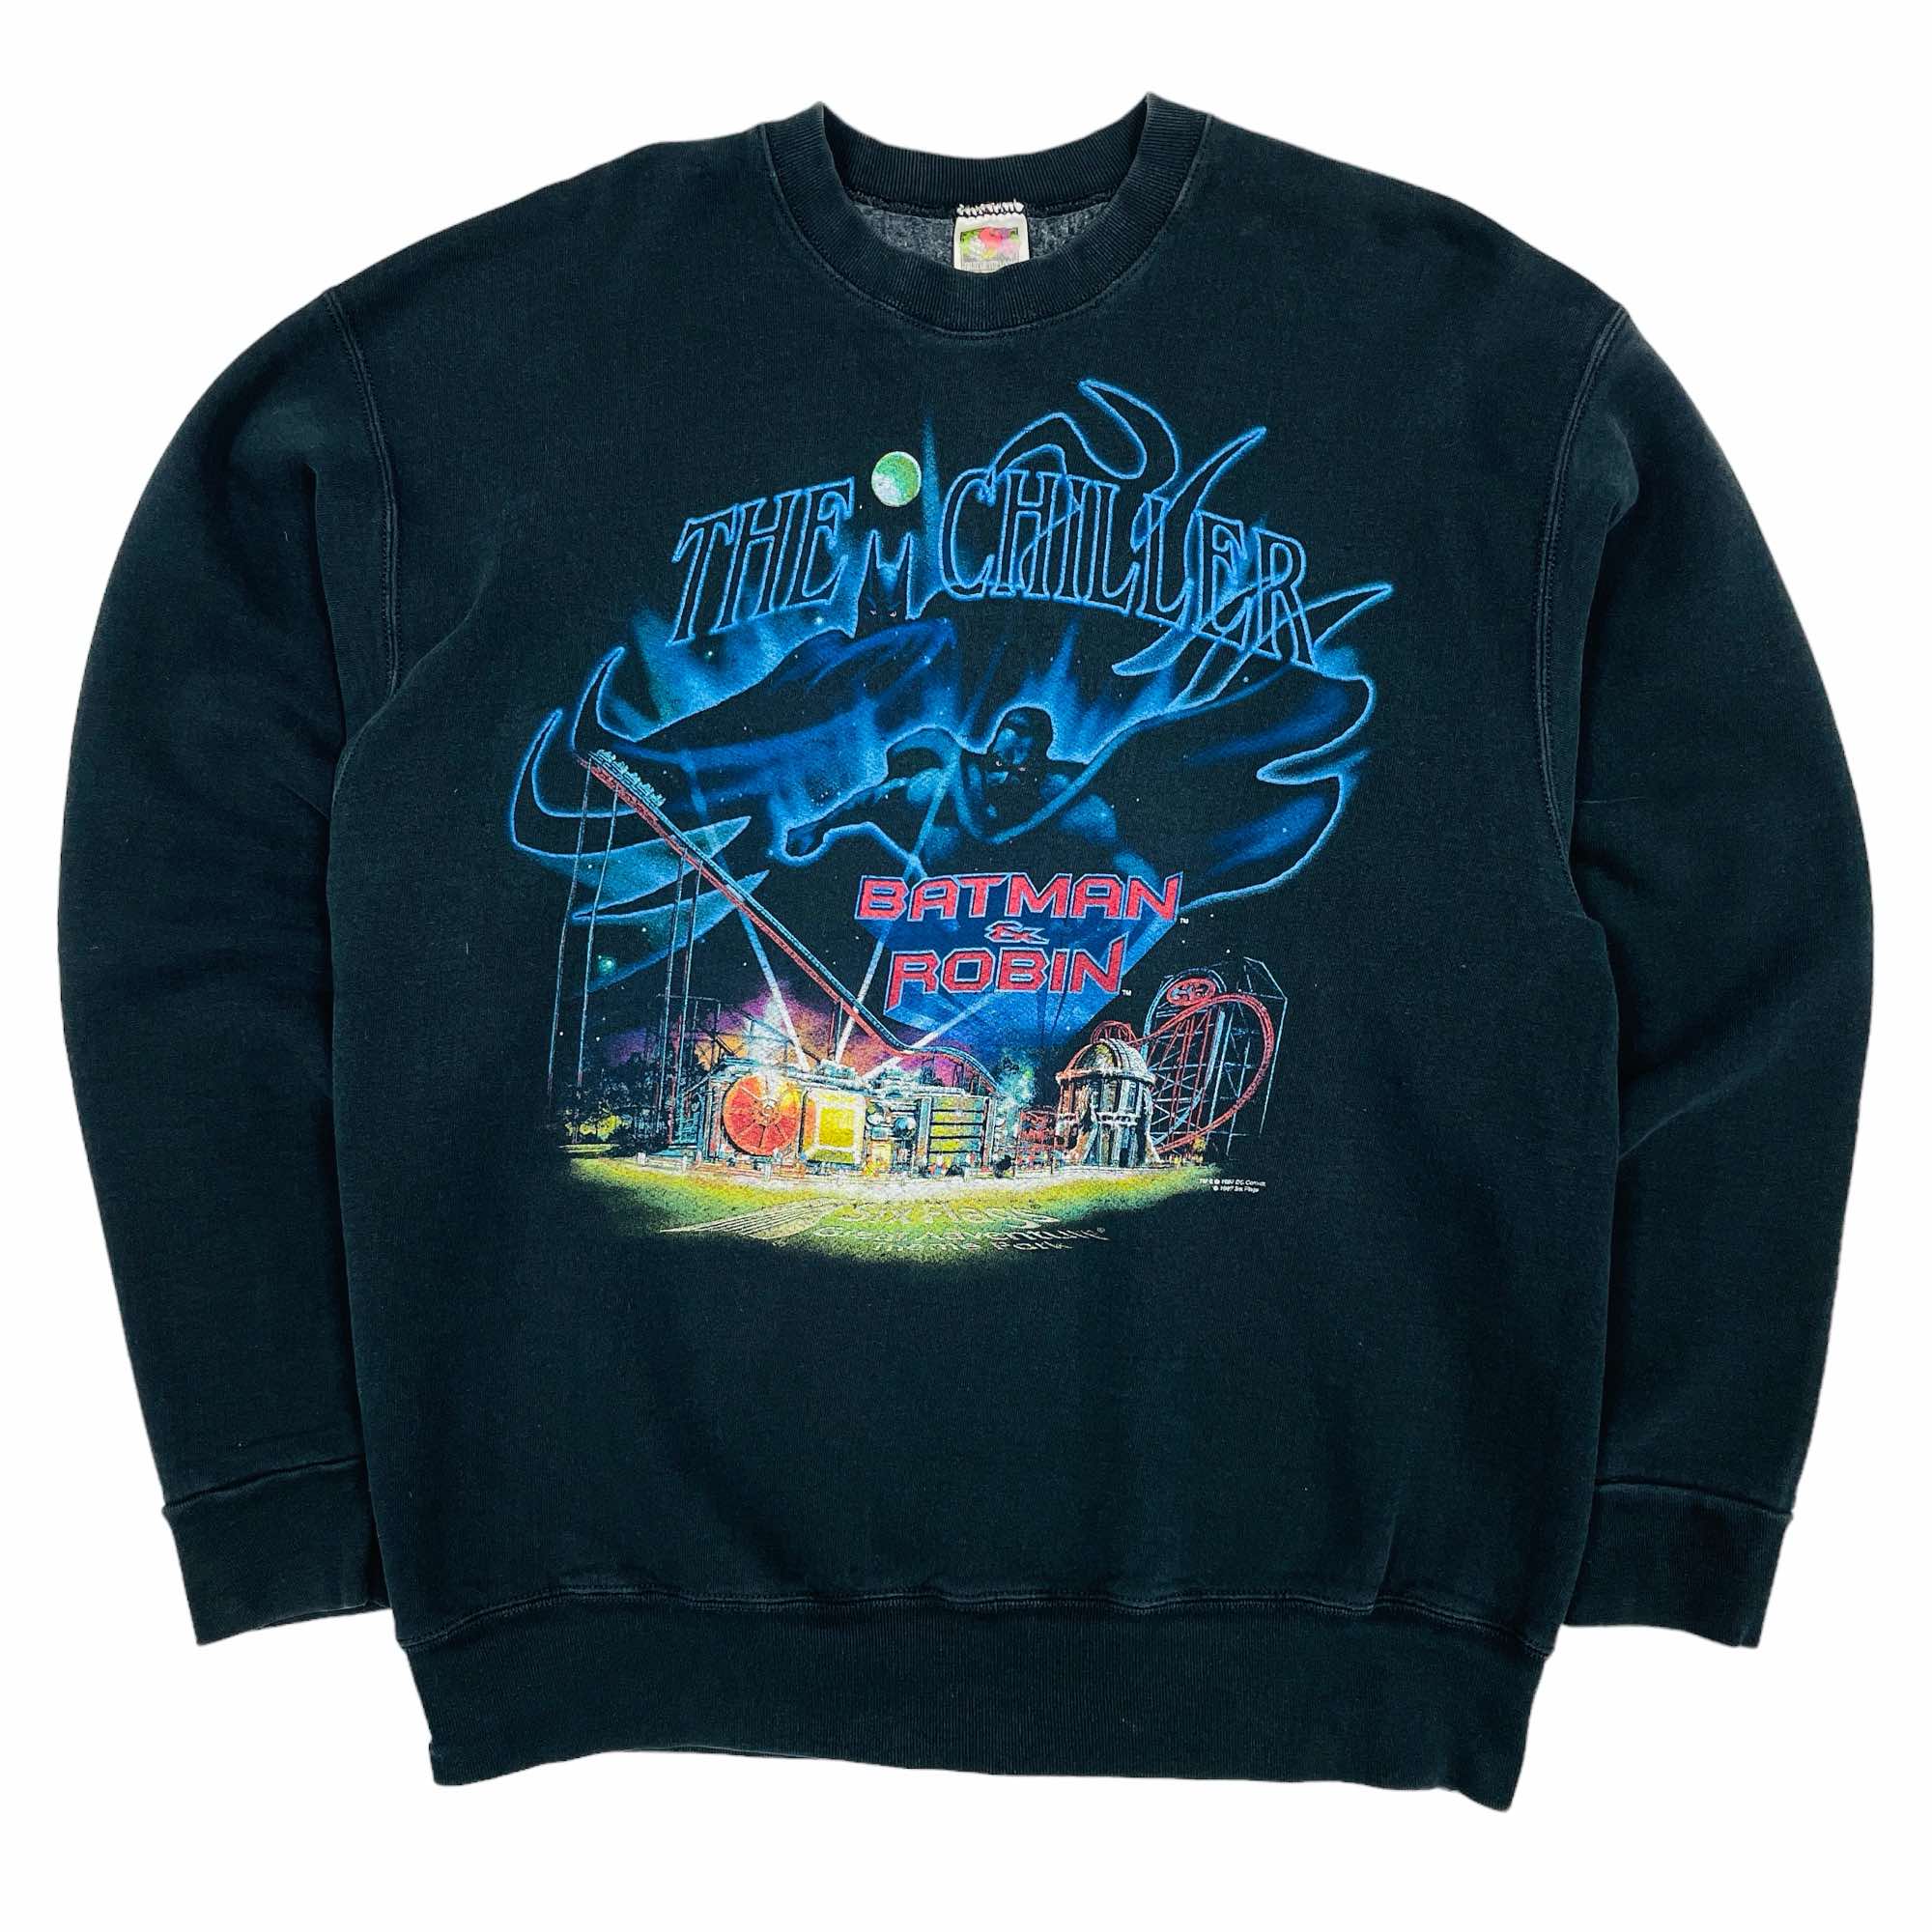 RARE Six Flags Batman & Robin The Chiller Ride Graphic Sweatshirt - Large